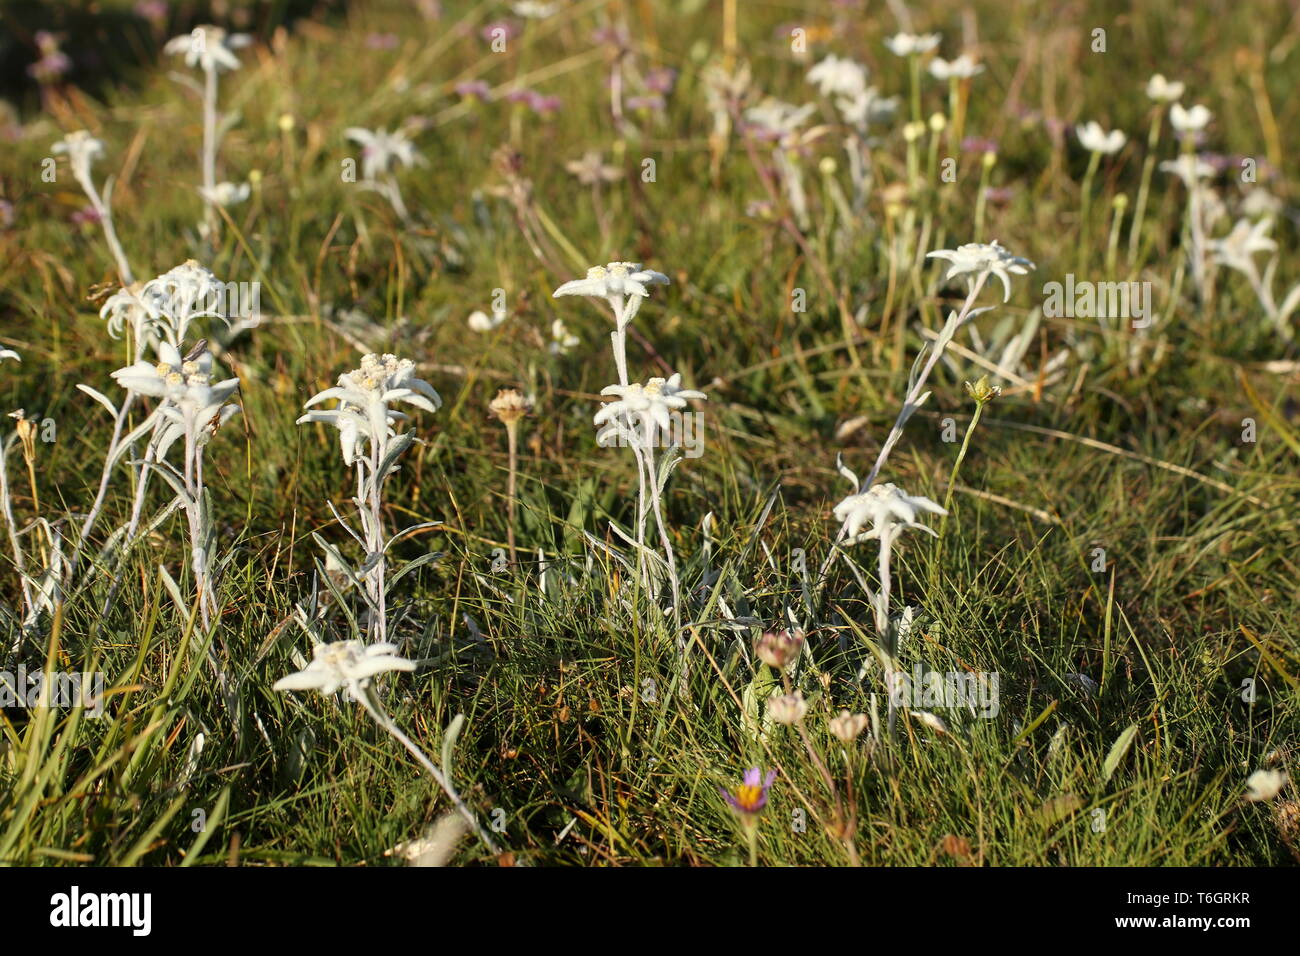 edelweis flowers on a field Stock Photo